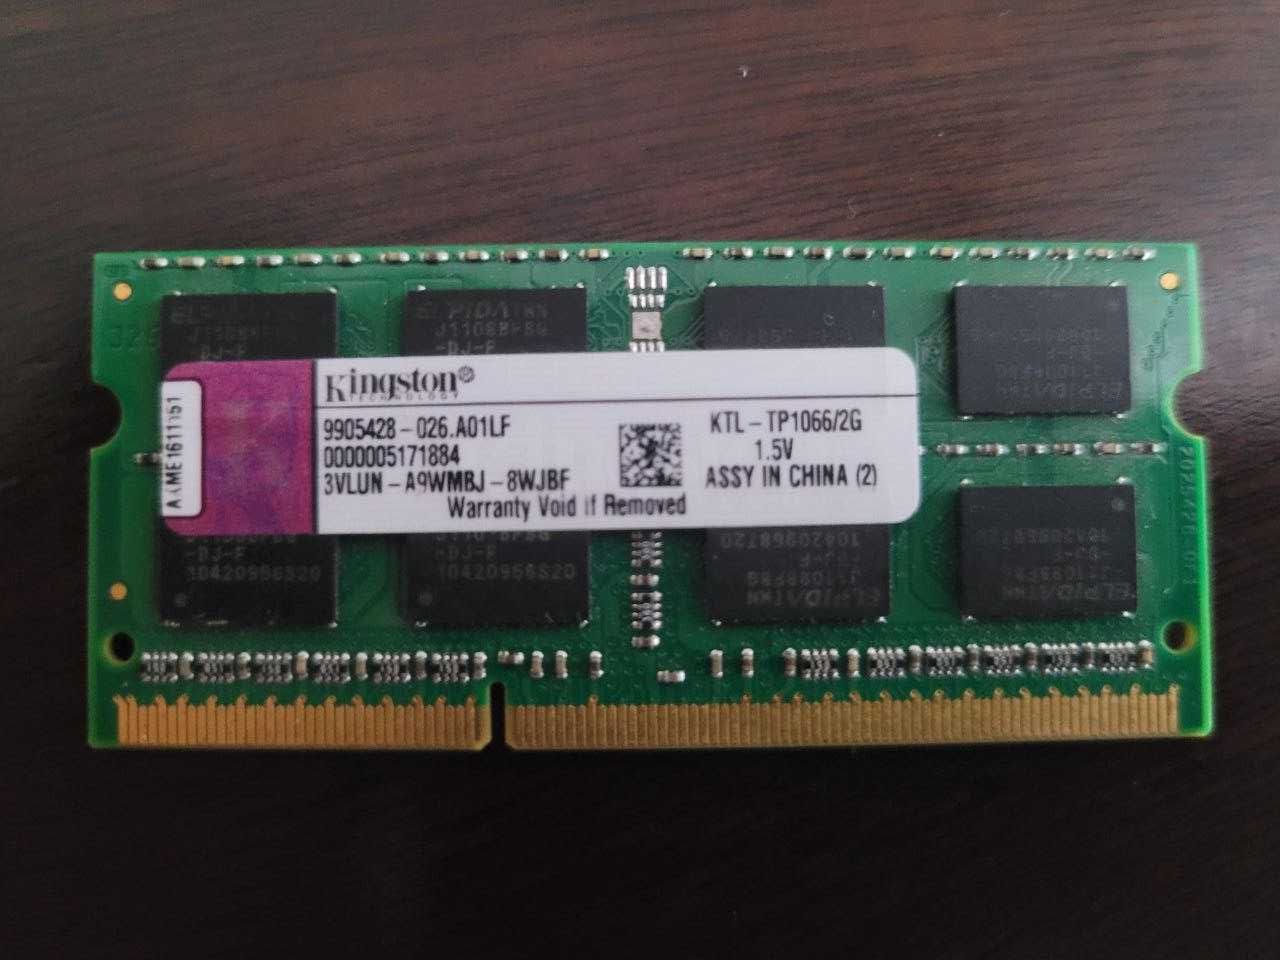 ЛОТ за 5шт Оперативна память DDR2  DDR3